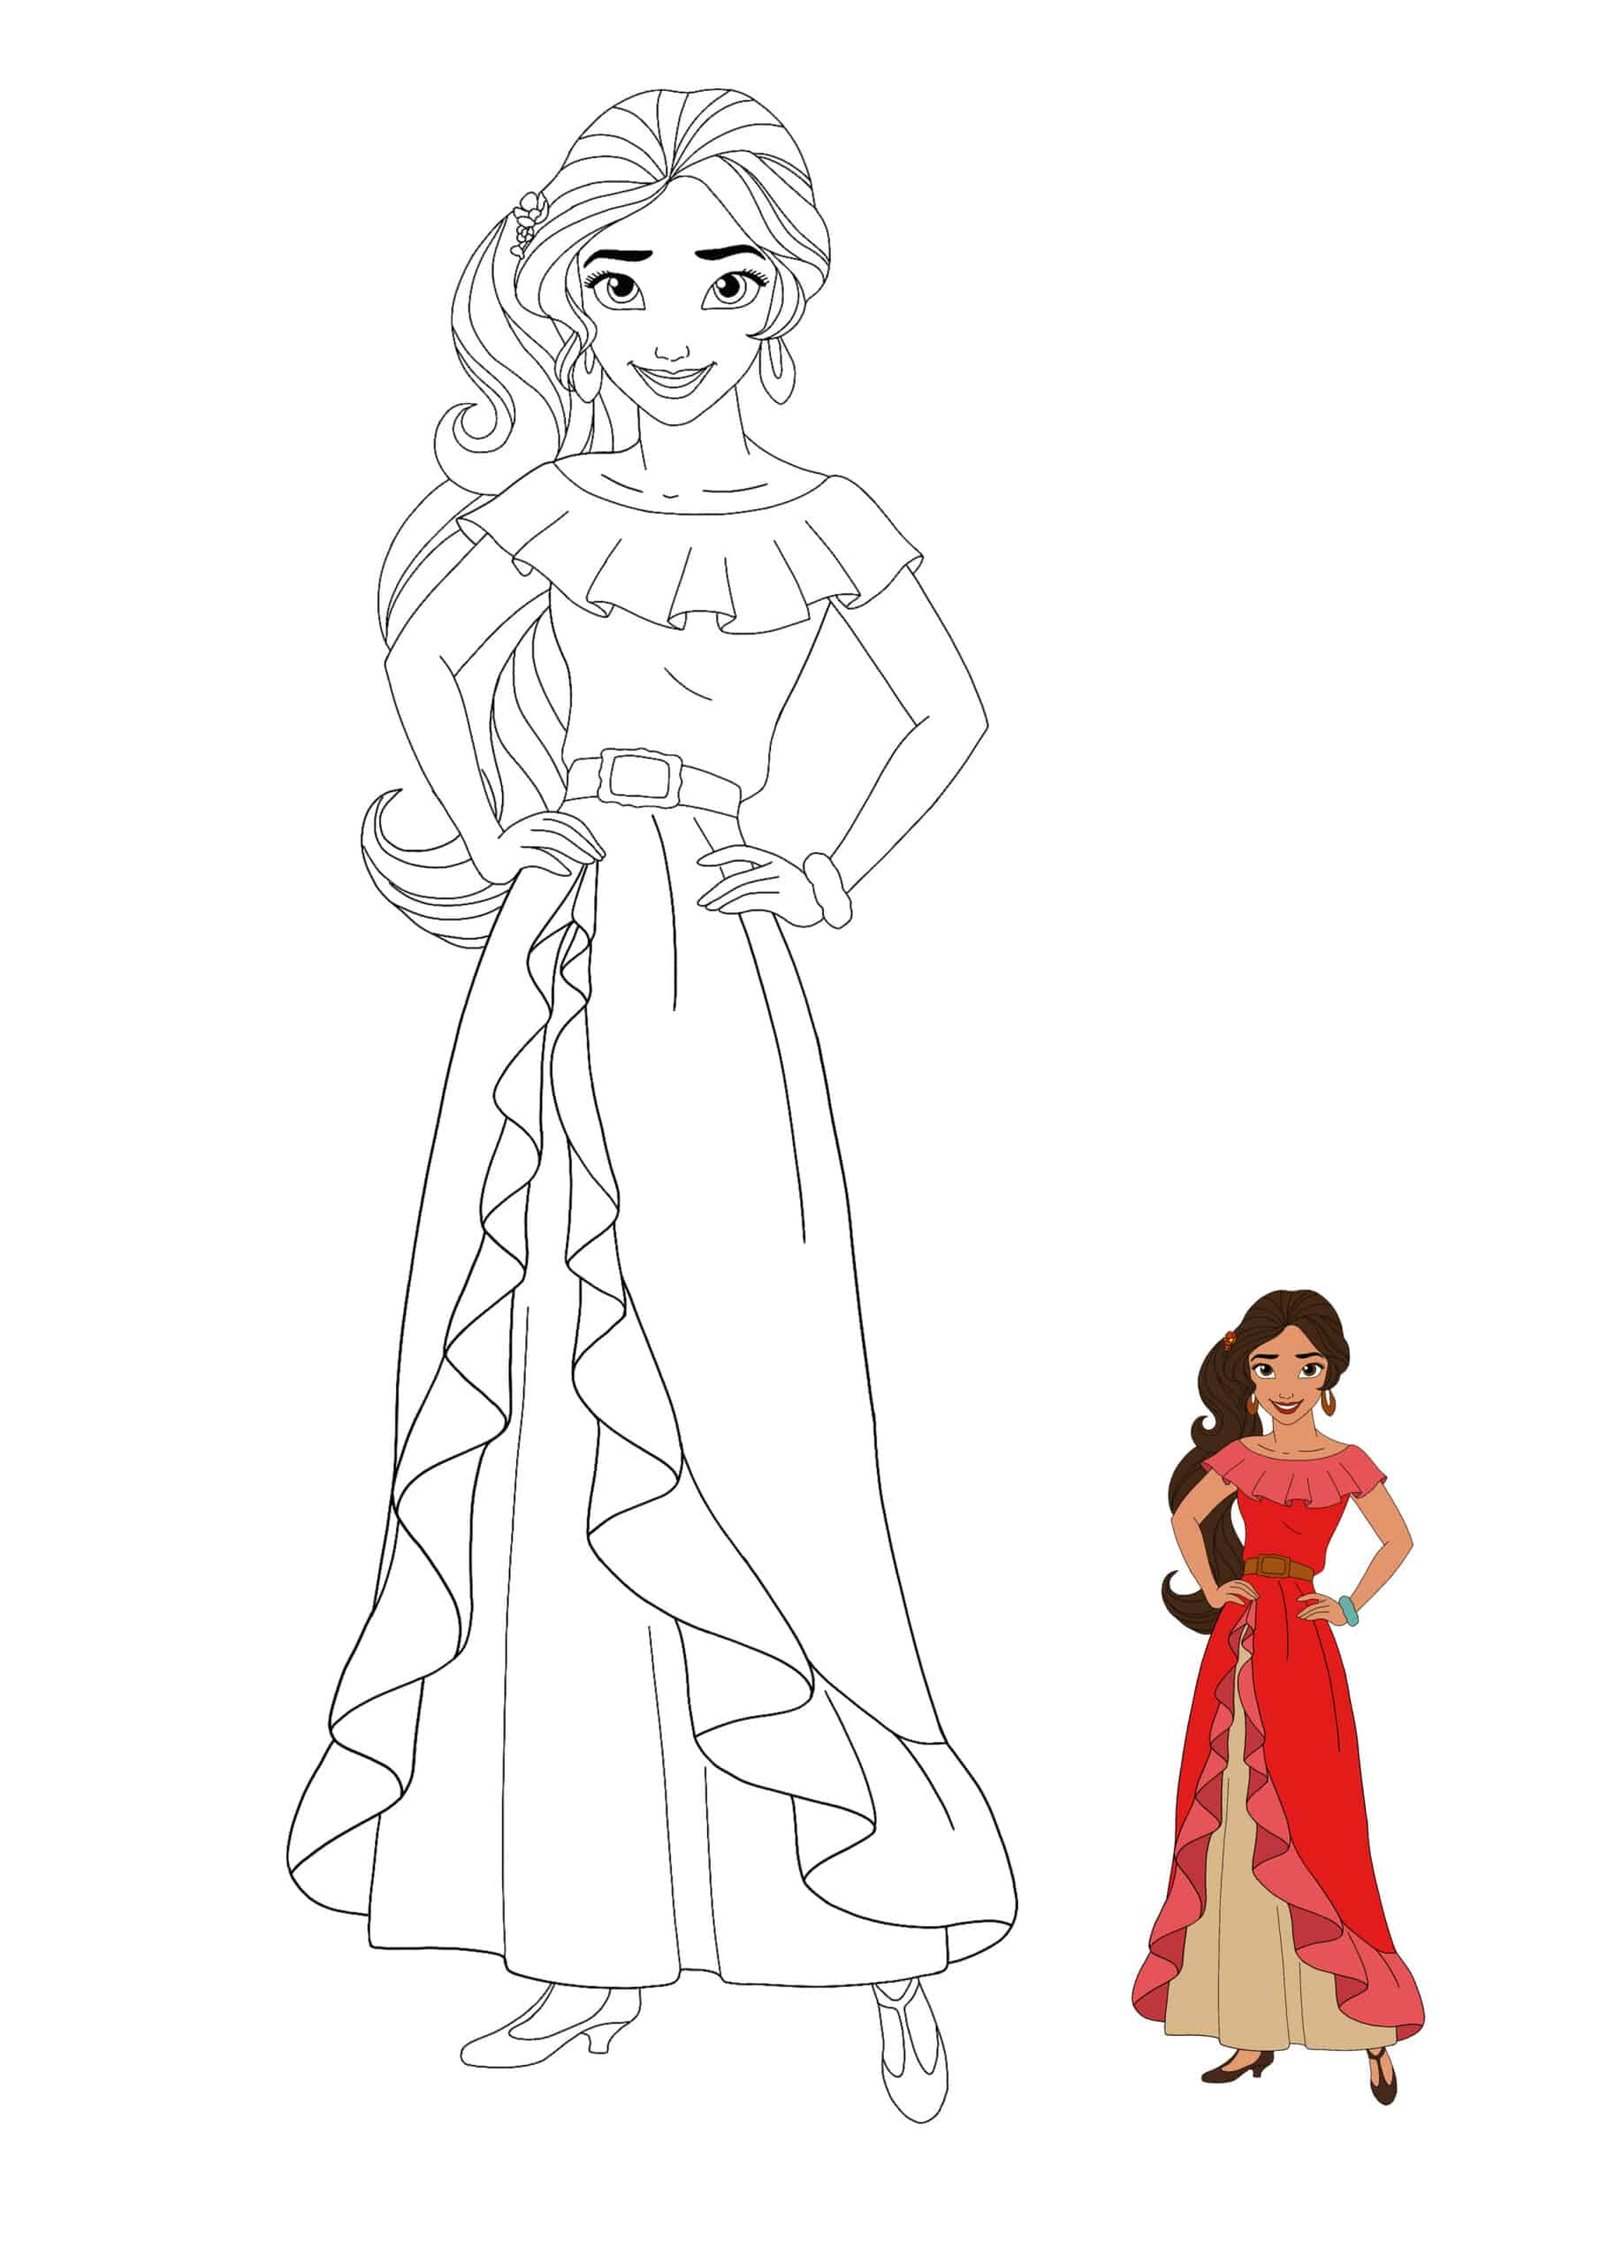 Disney Princess Elena coloring sheet